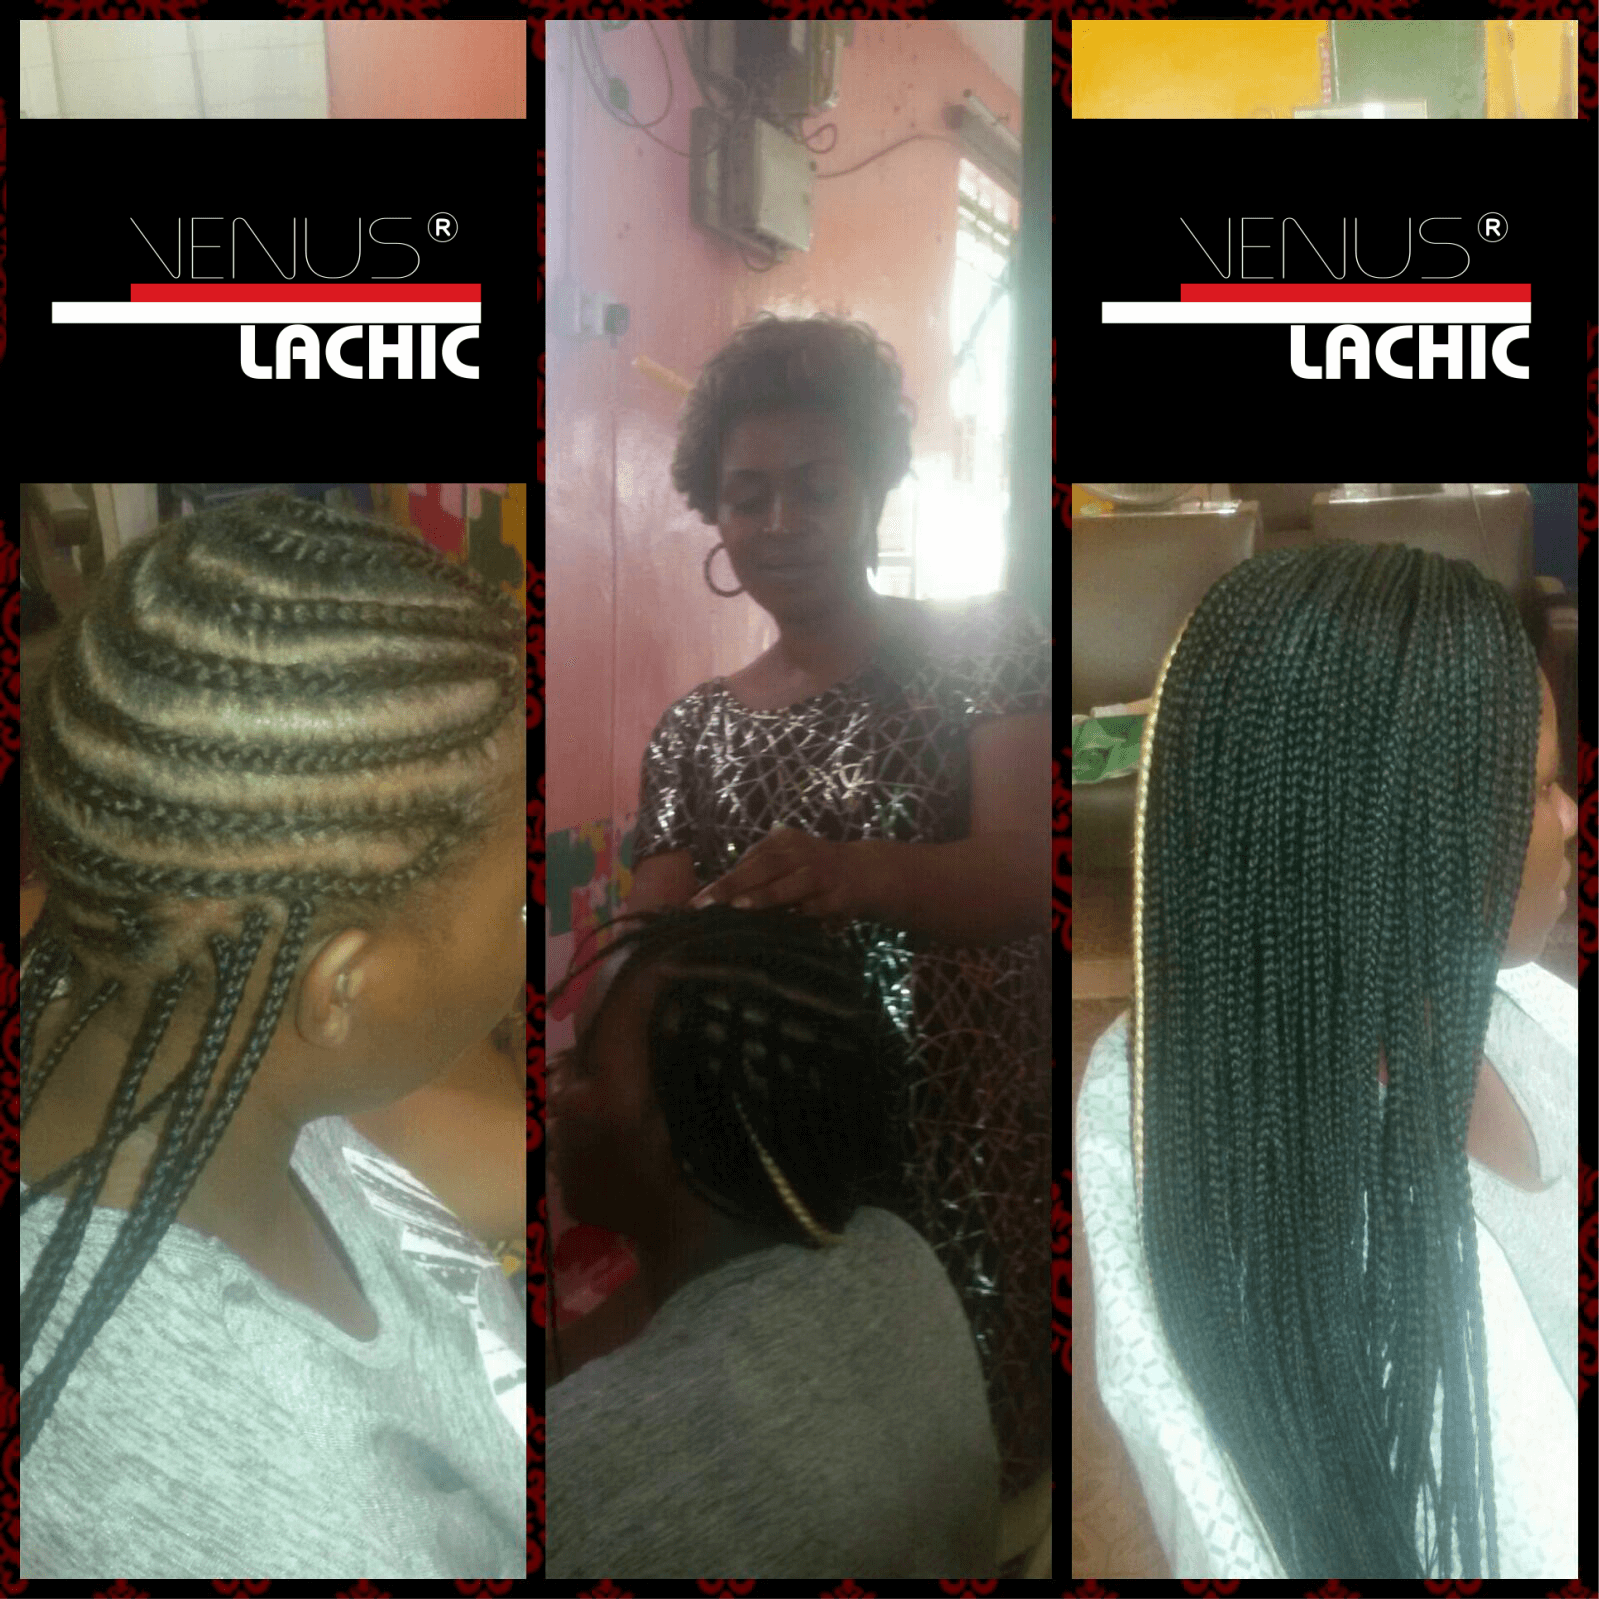 venus lachic crotches braid 2015 amillionstyles.com hairstyles 6